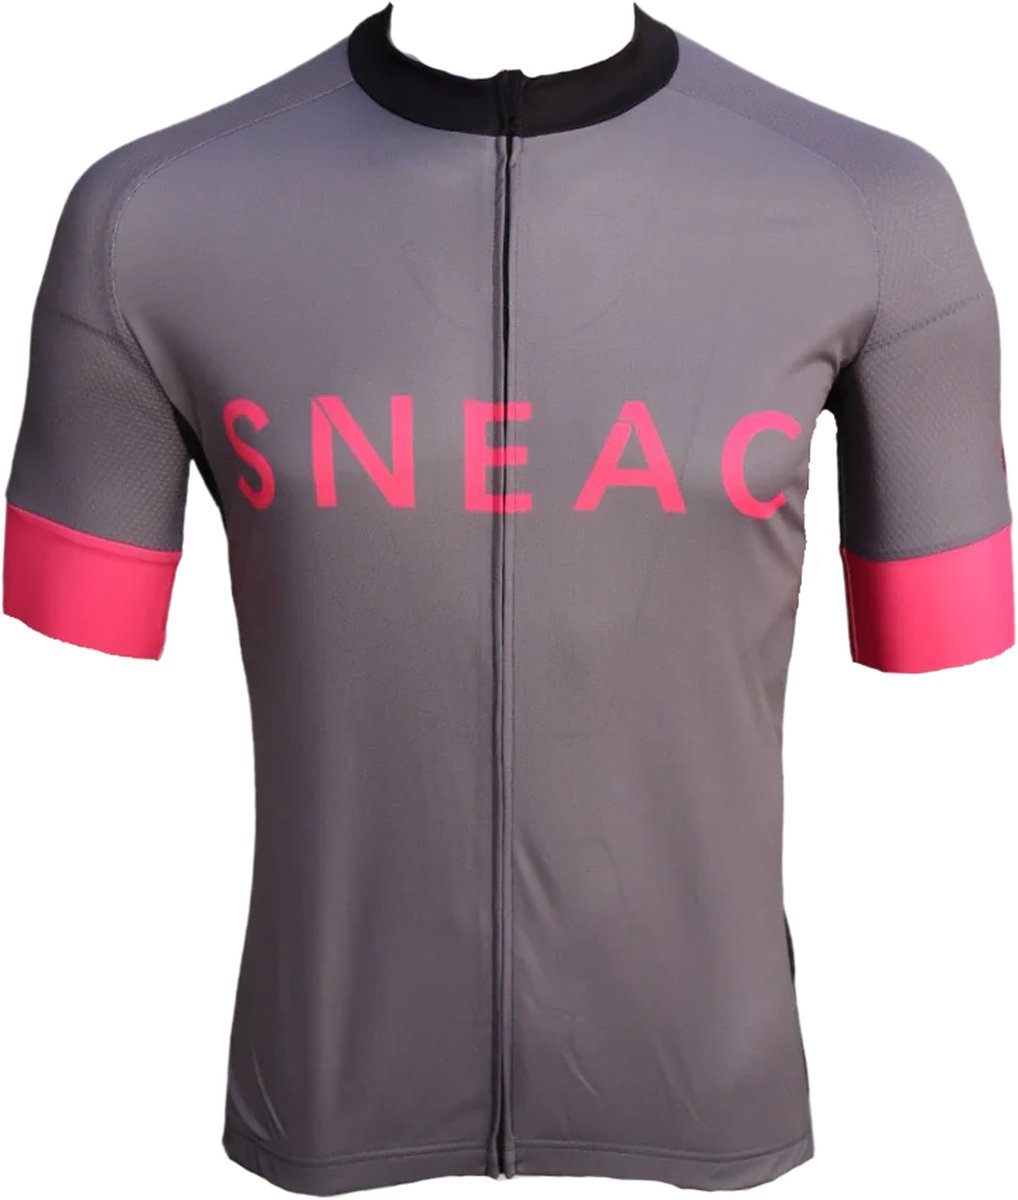 SNEAC comformance wear - Wielershirt korte mouw -SNEAC- grijs , maat XL